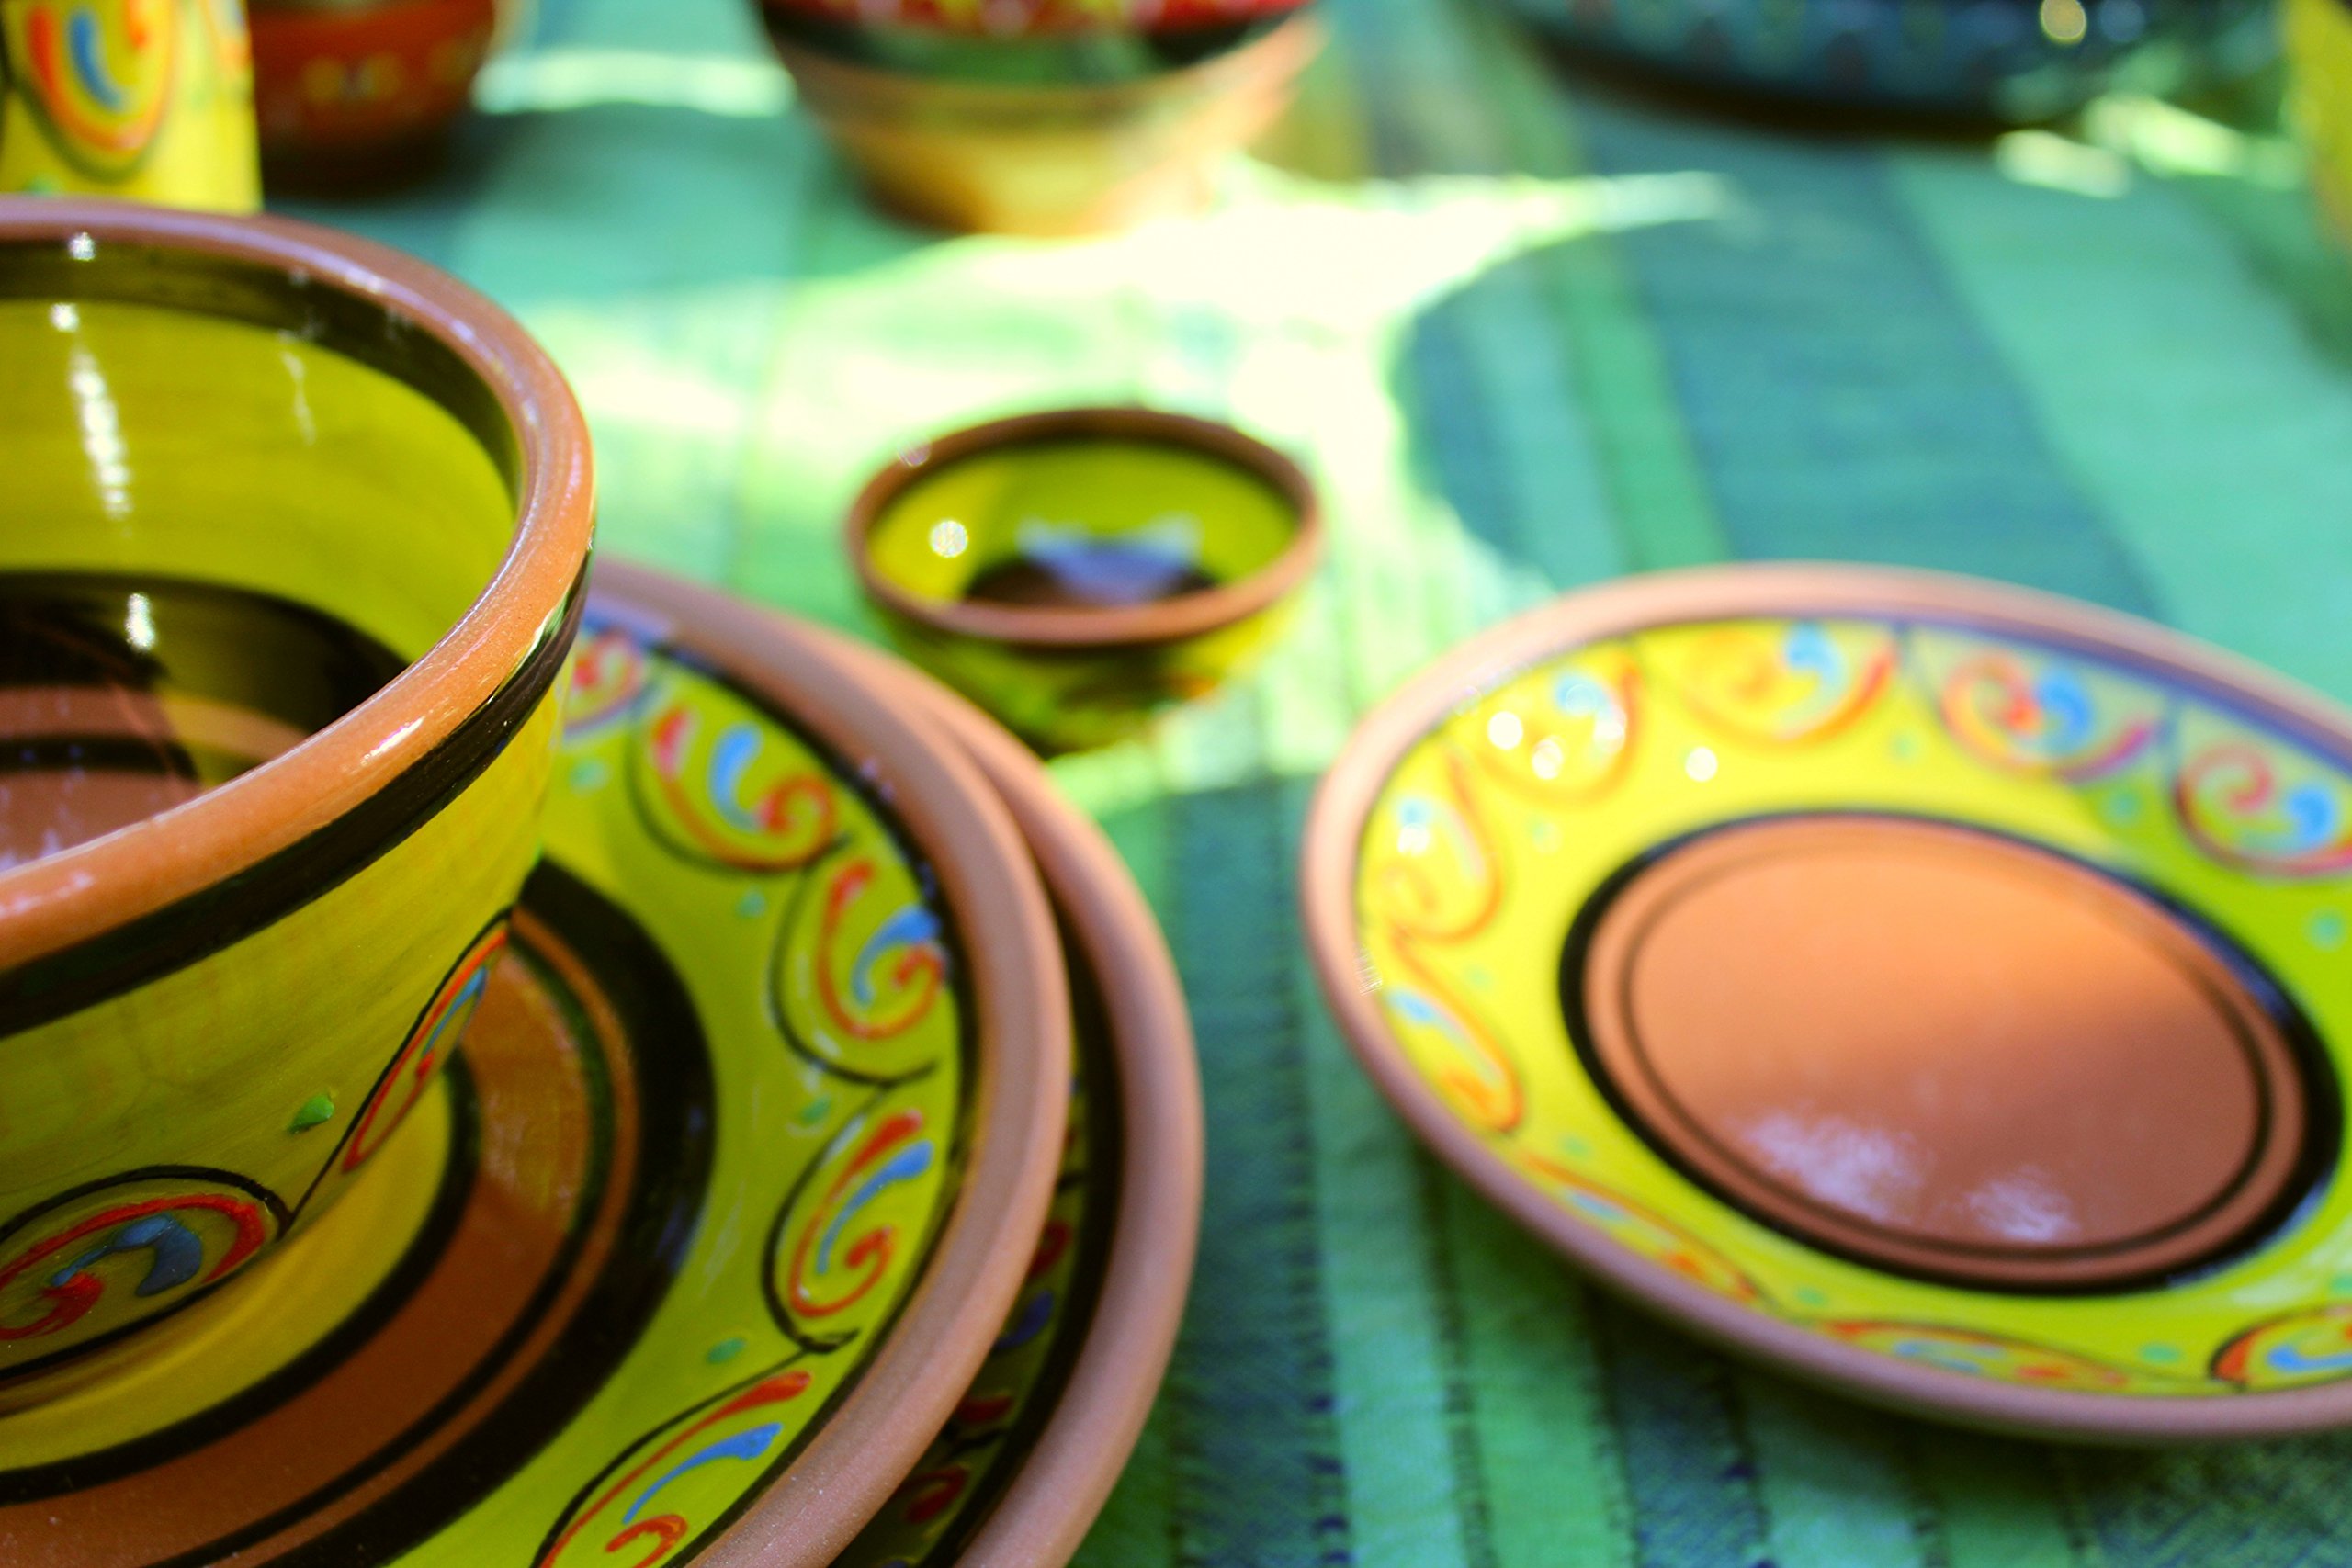 Canyon Cactus Ceramics Spanish Terracotta Set of 3 Small Dipping Bowls, Yellow